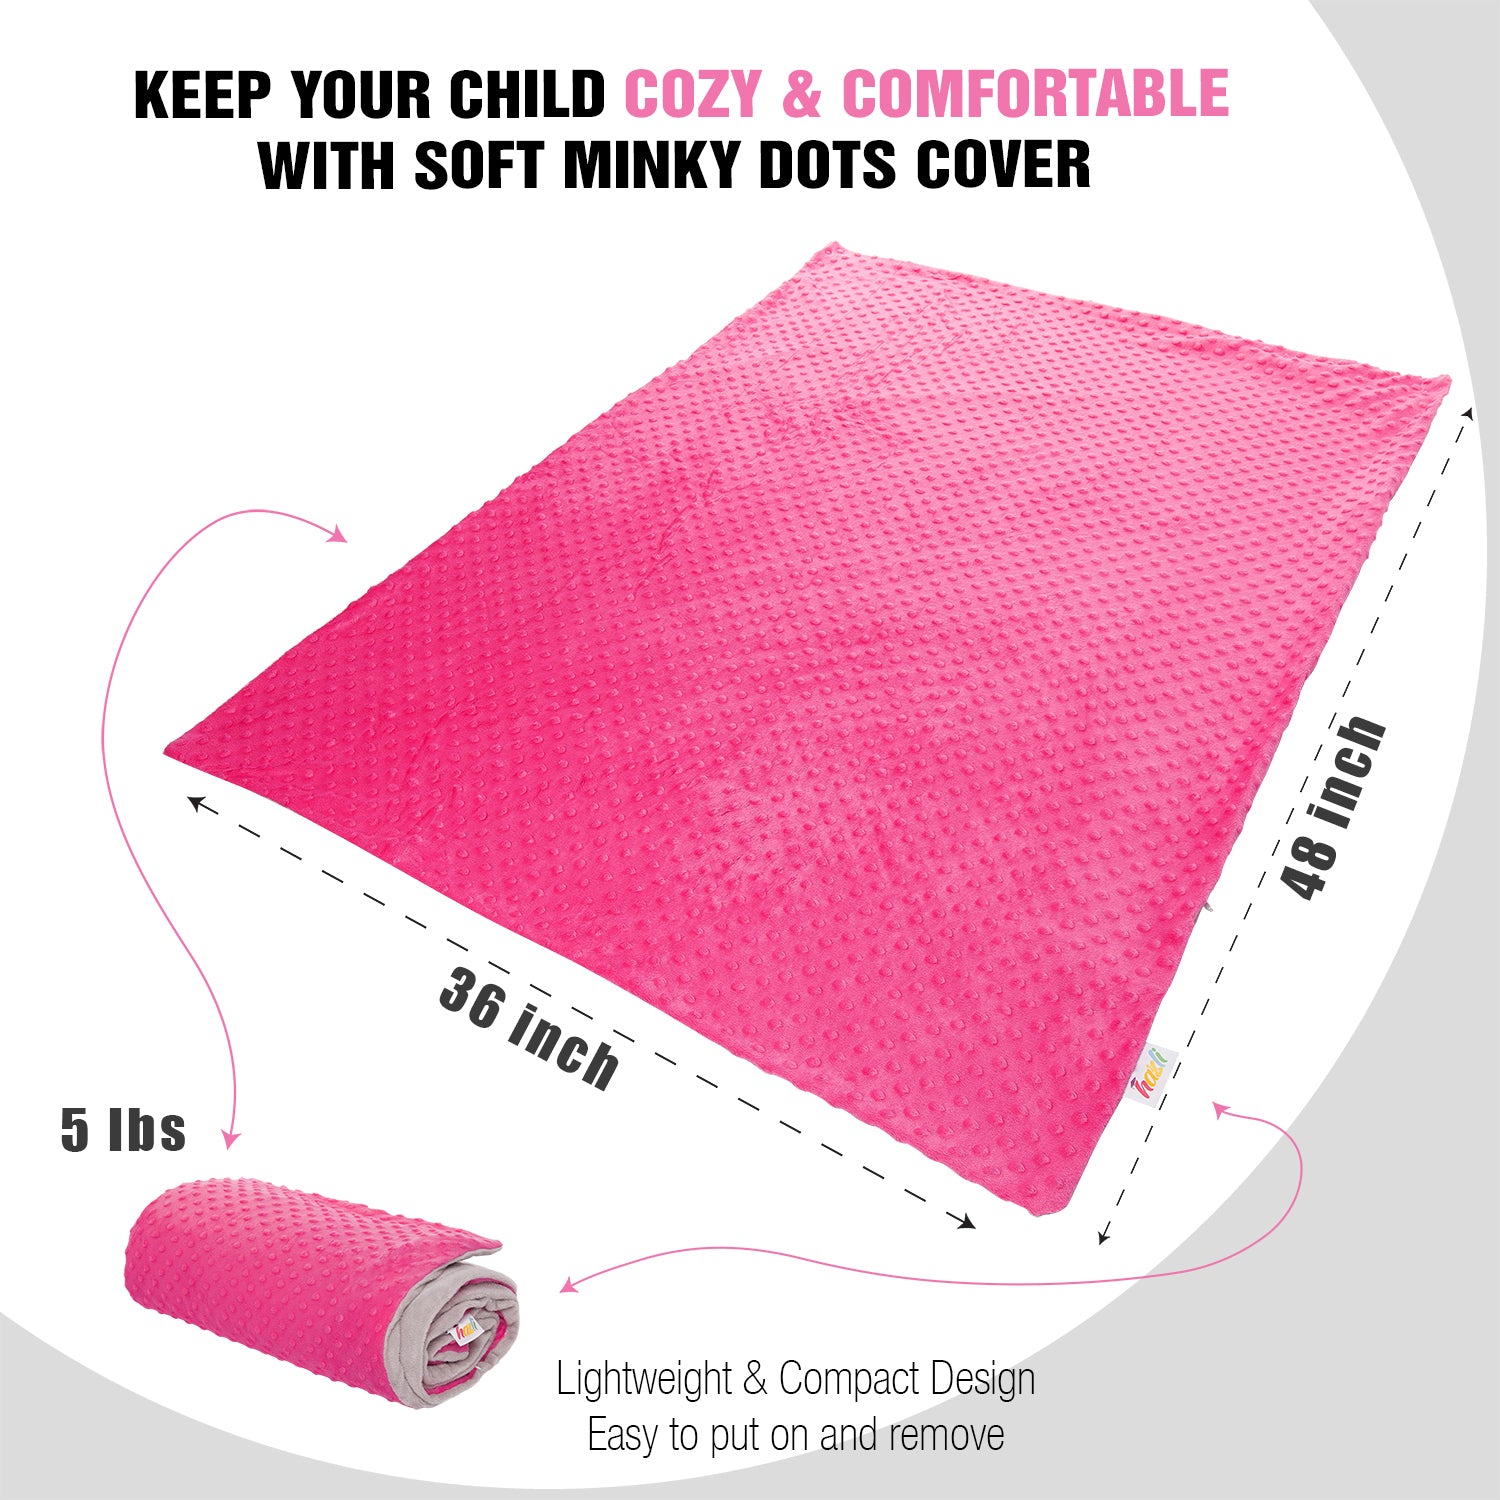 Comfort blanket for girls - pink weighted blanket girls blanket 5lbs